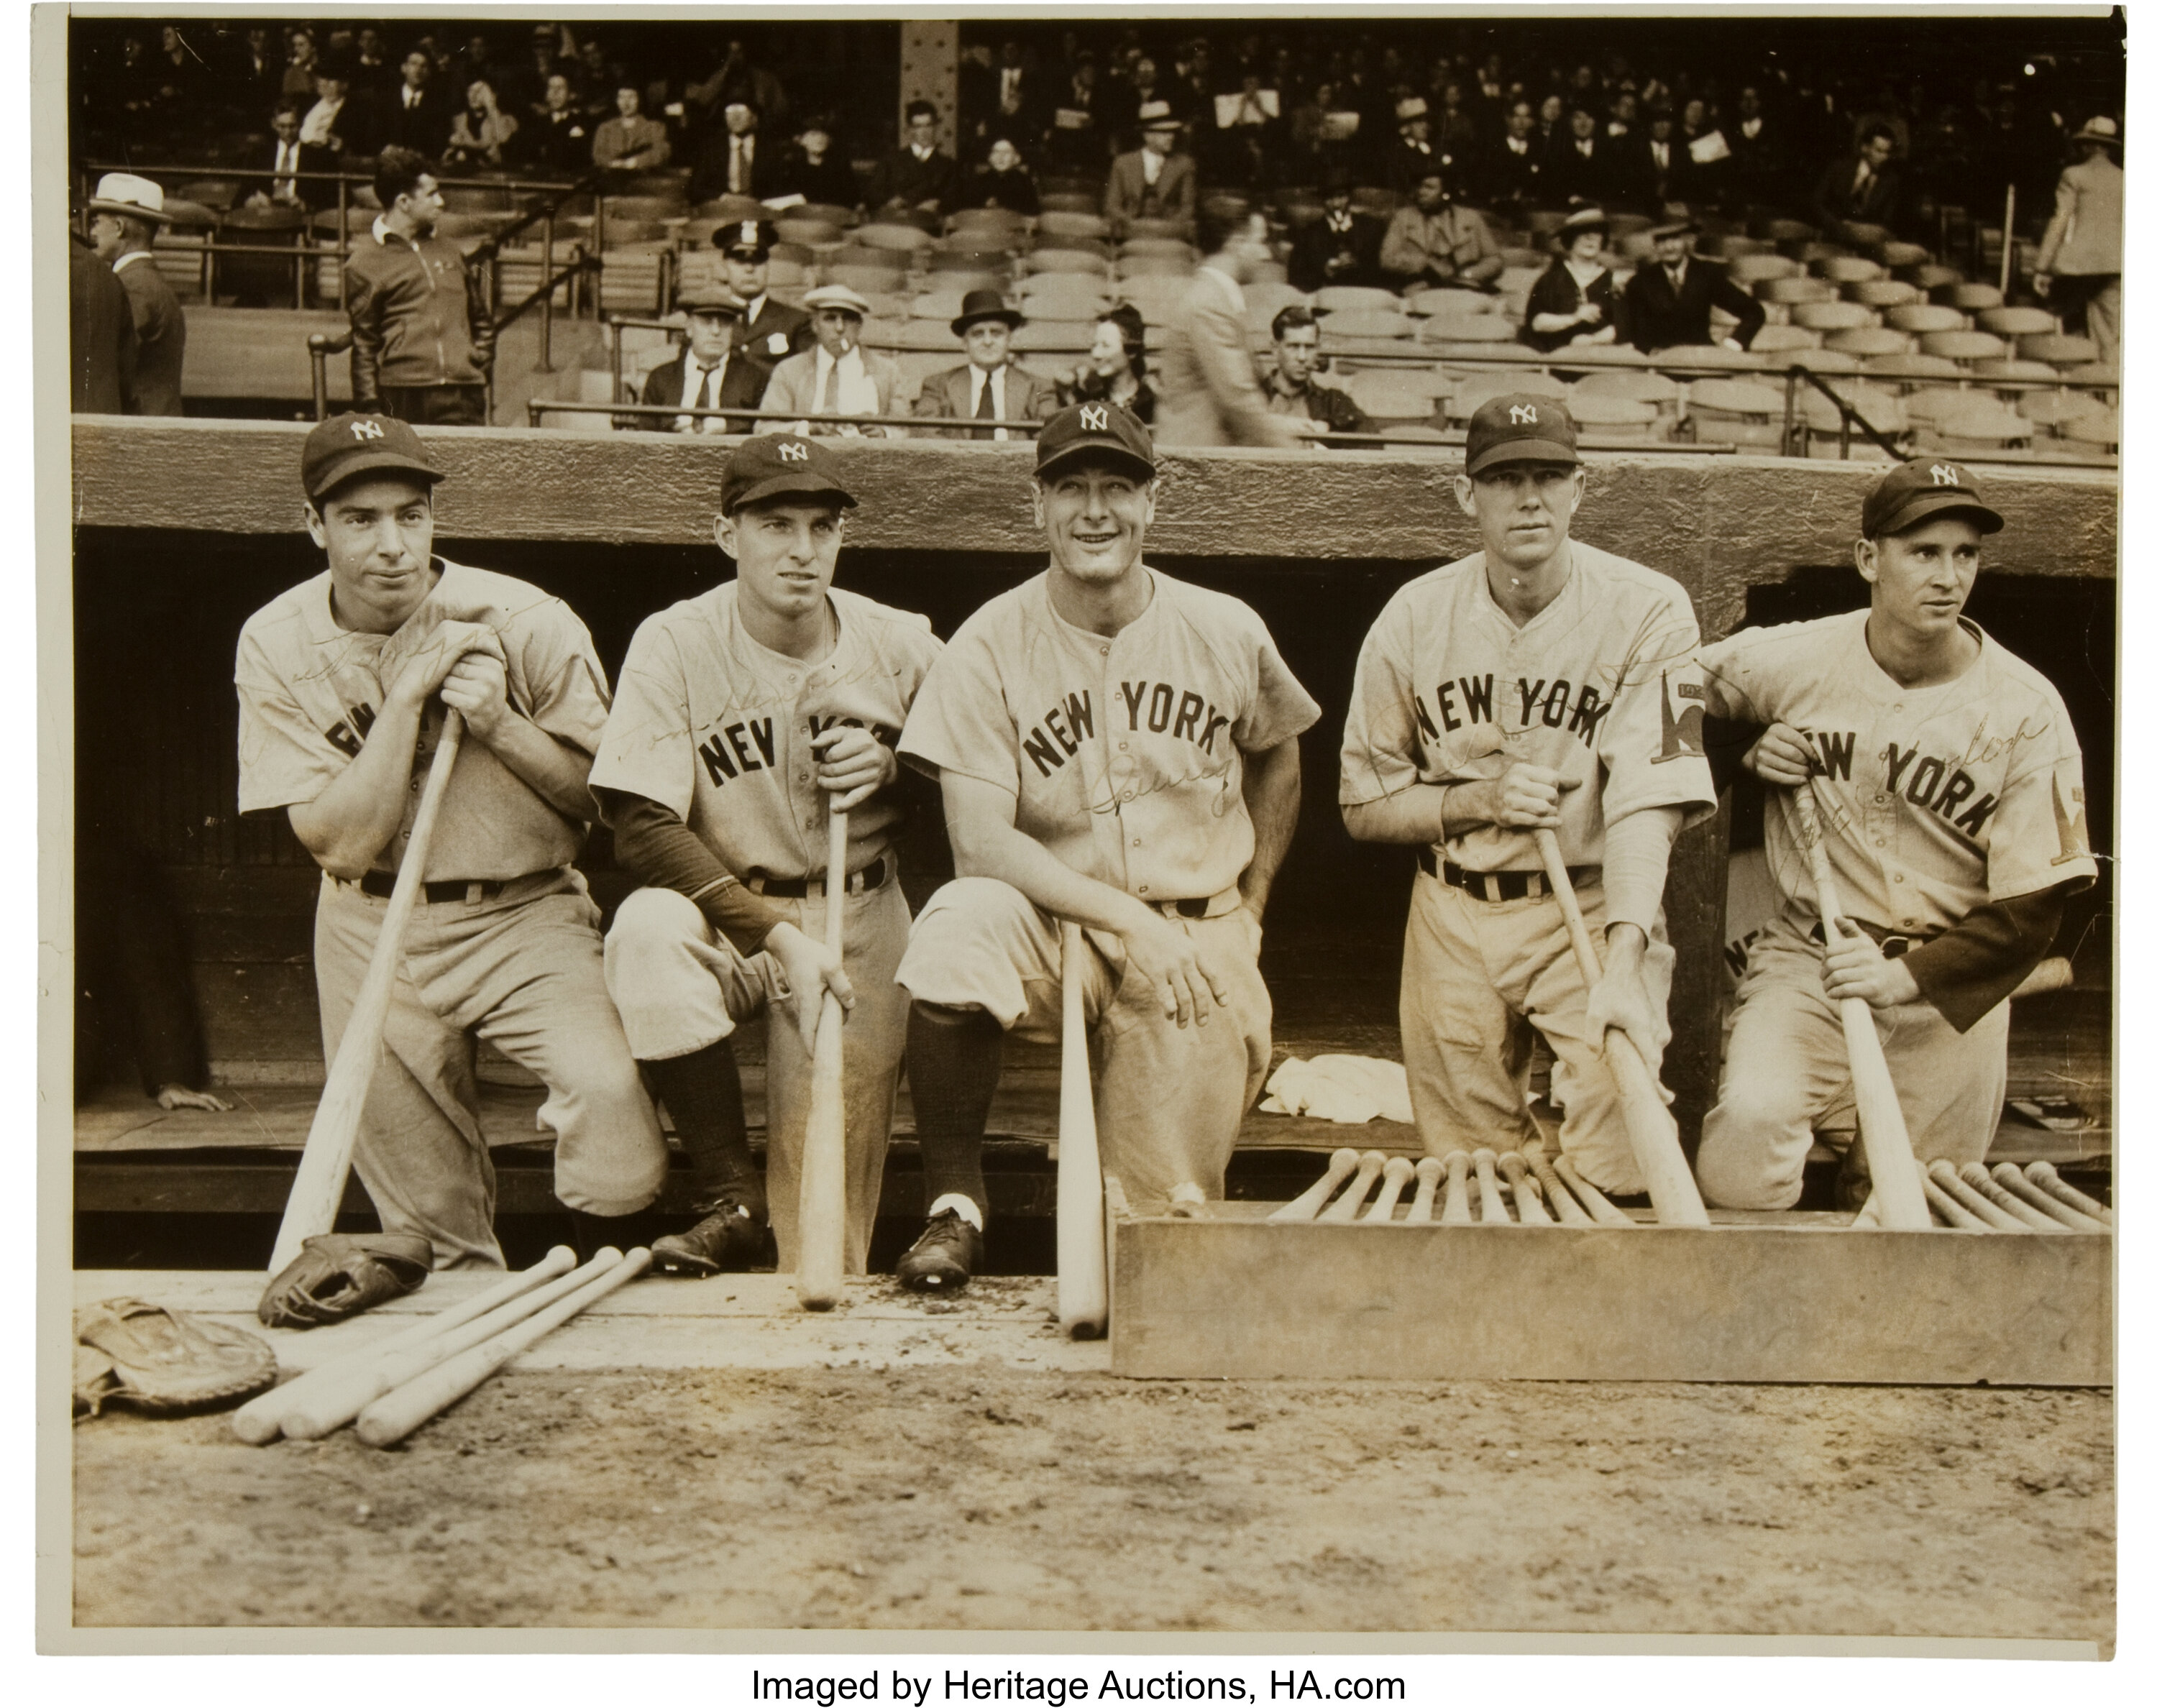 OldTimeHardball on X: Oct 1, 1932 - New York #Yankees legends Lou